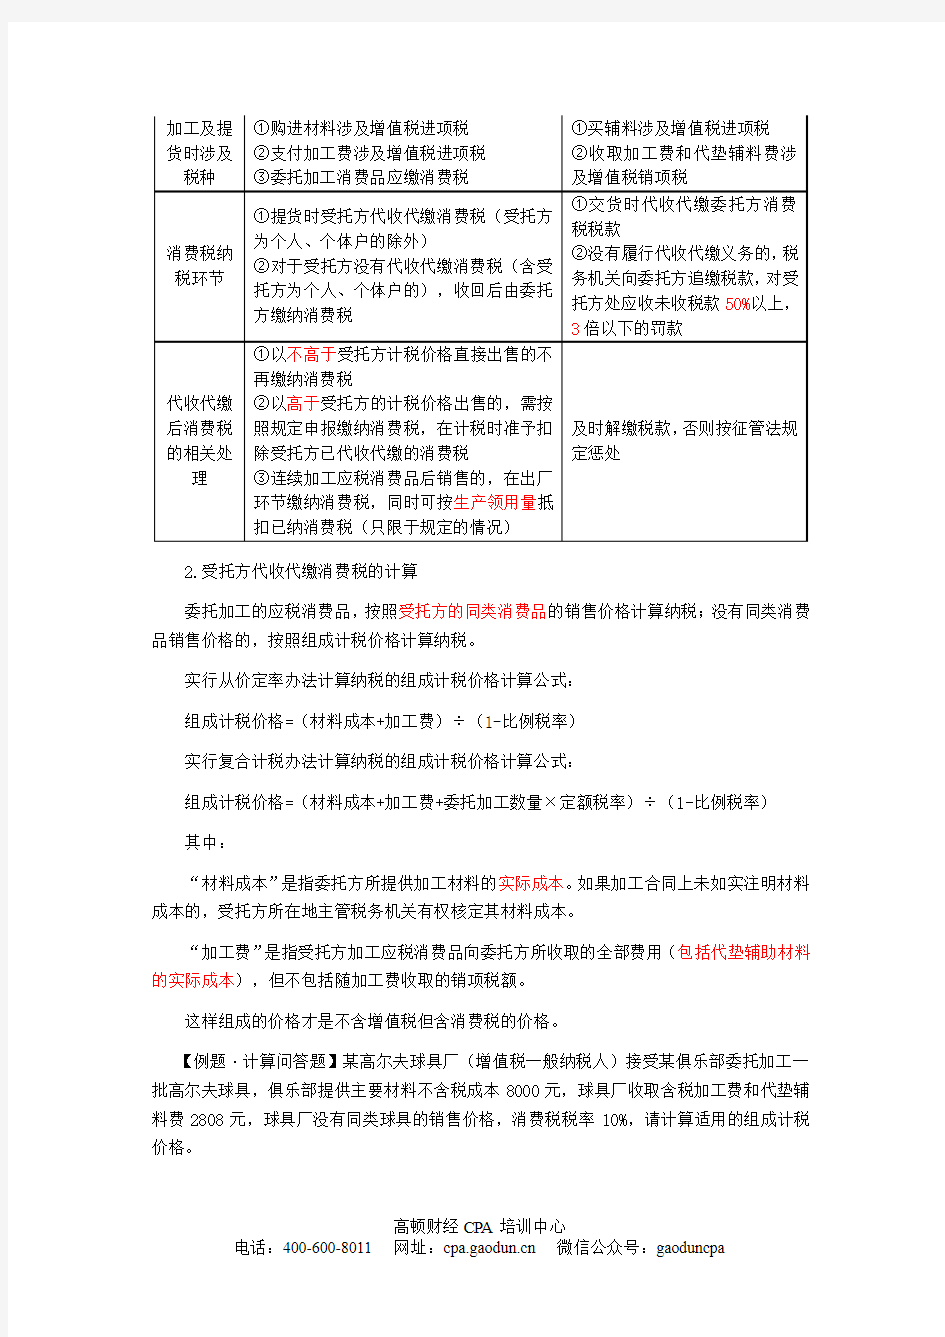 CPA考试税法科目讲义_024_0304_j